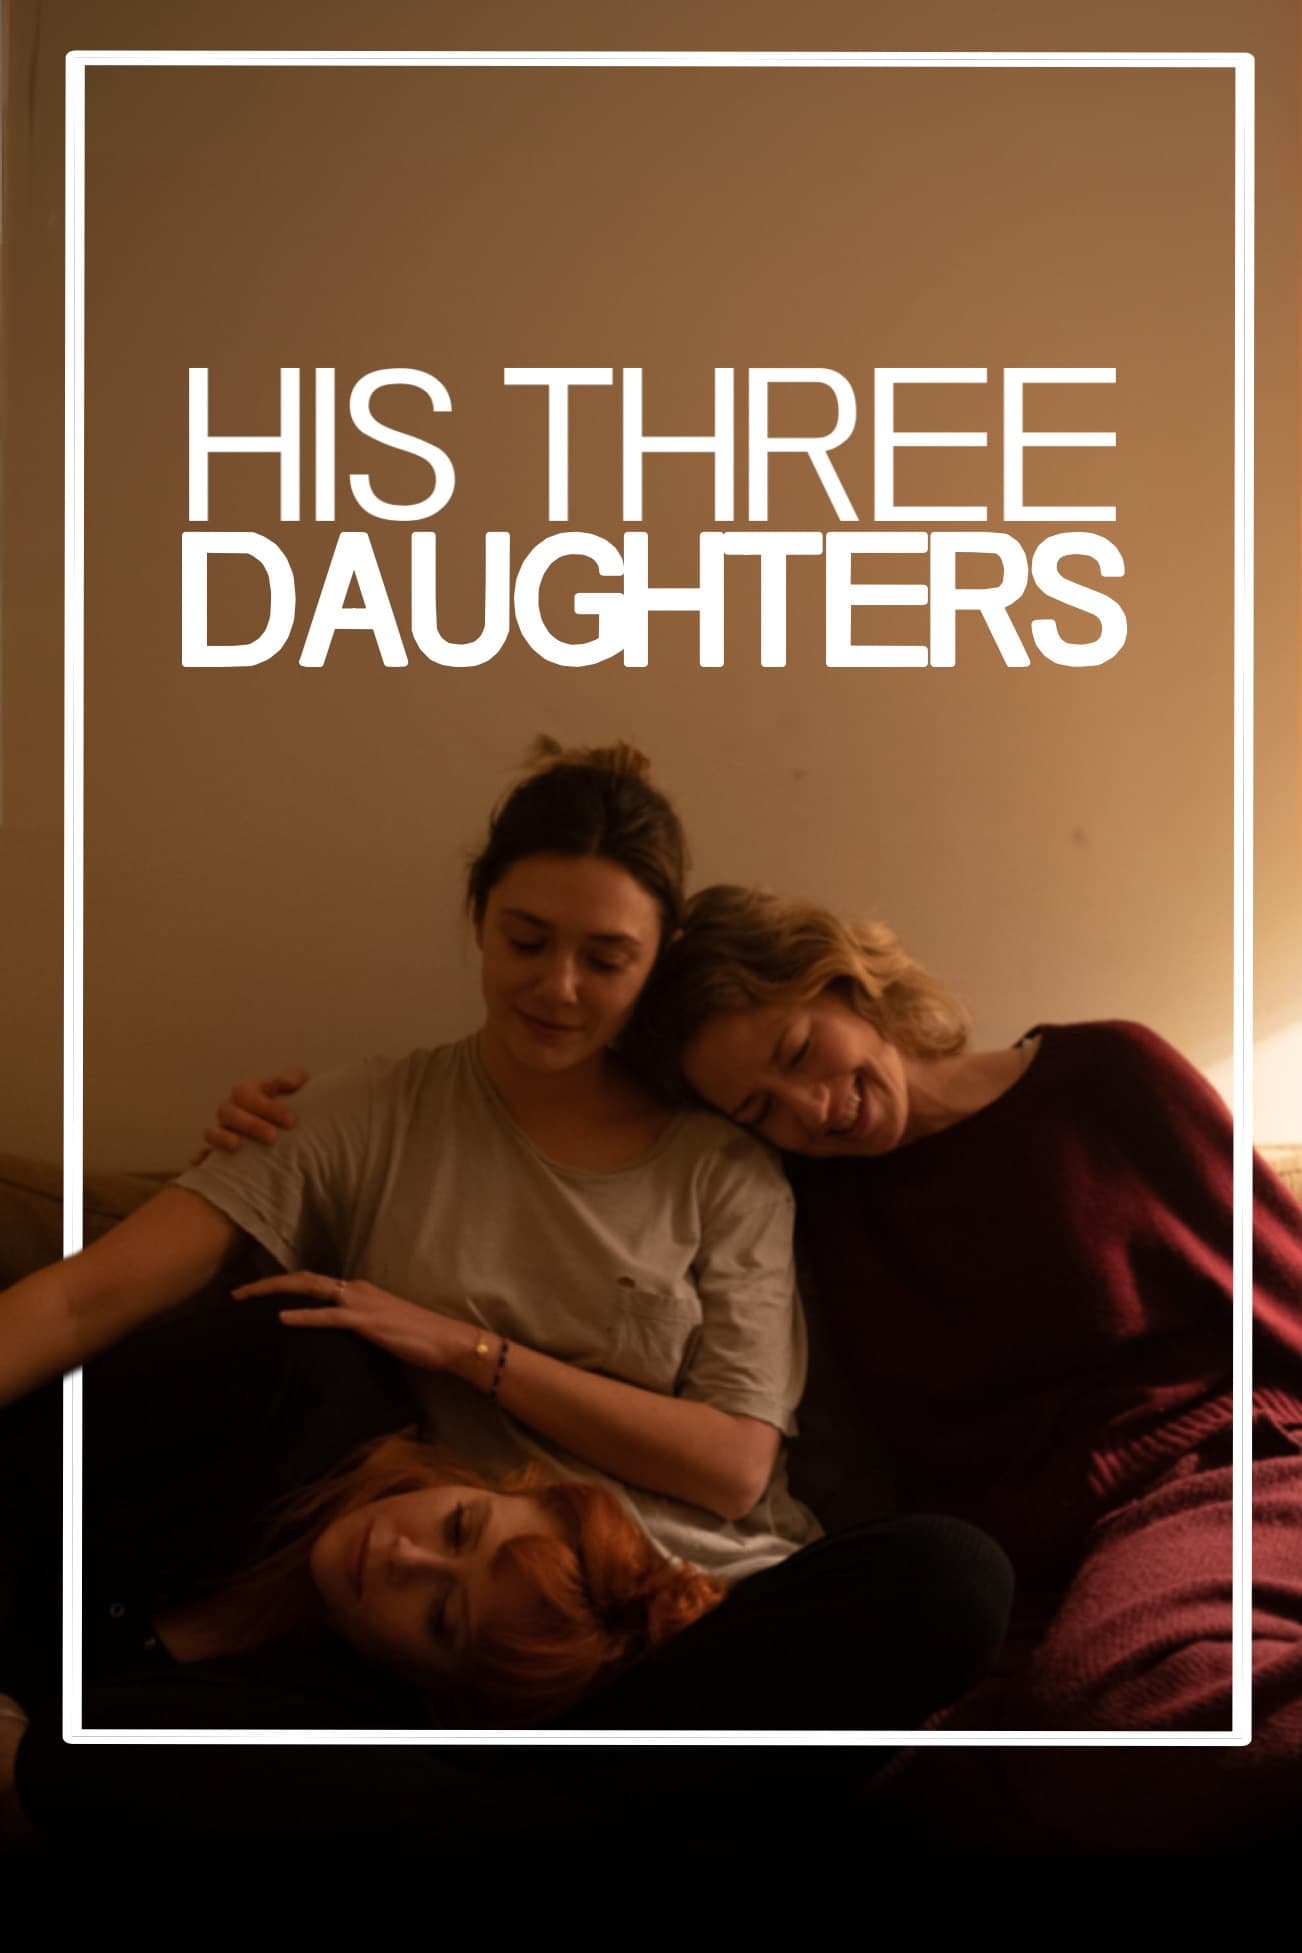 His Three Daughters film